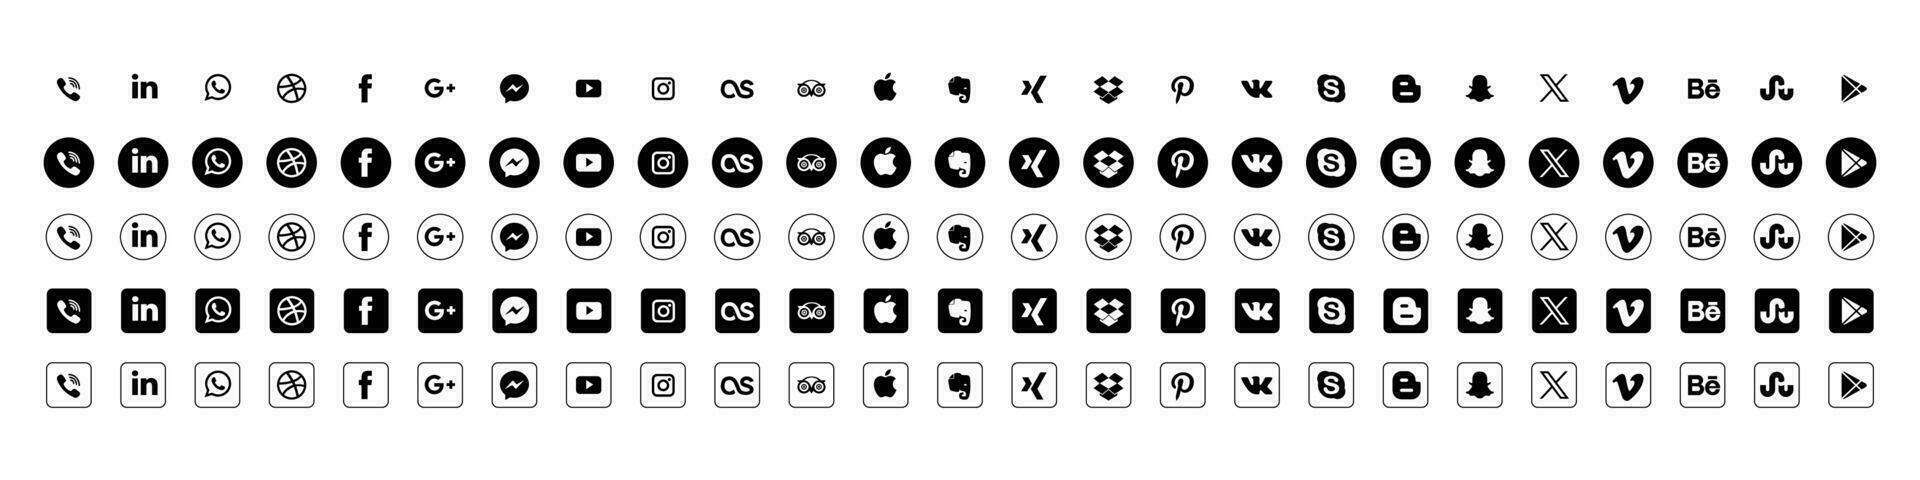 Social media logotype set. X Youtube Facebook Instagram Twitter  Threads Snapchat Whatsap Pinterest Linkedin Vimeo Tiktok Periscope Behance  logo set. Social network icons vector